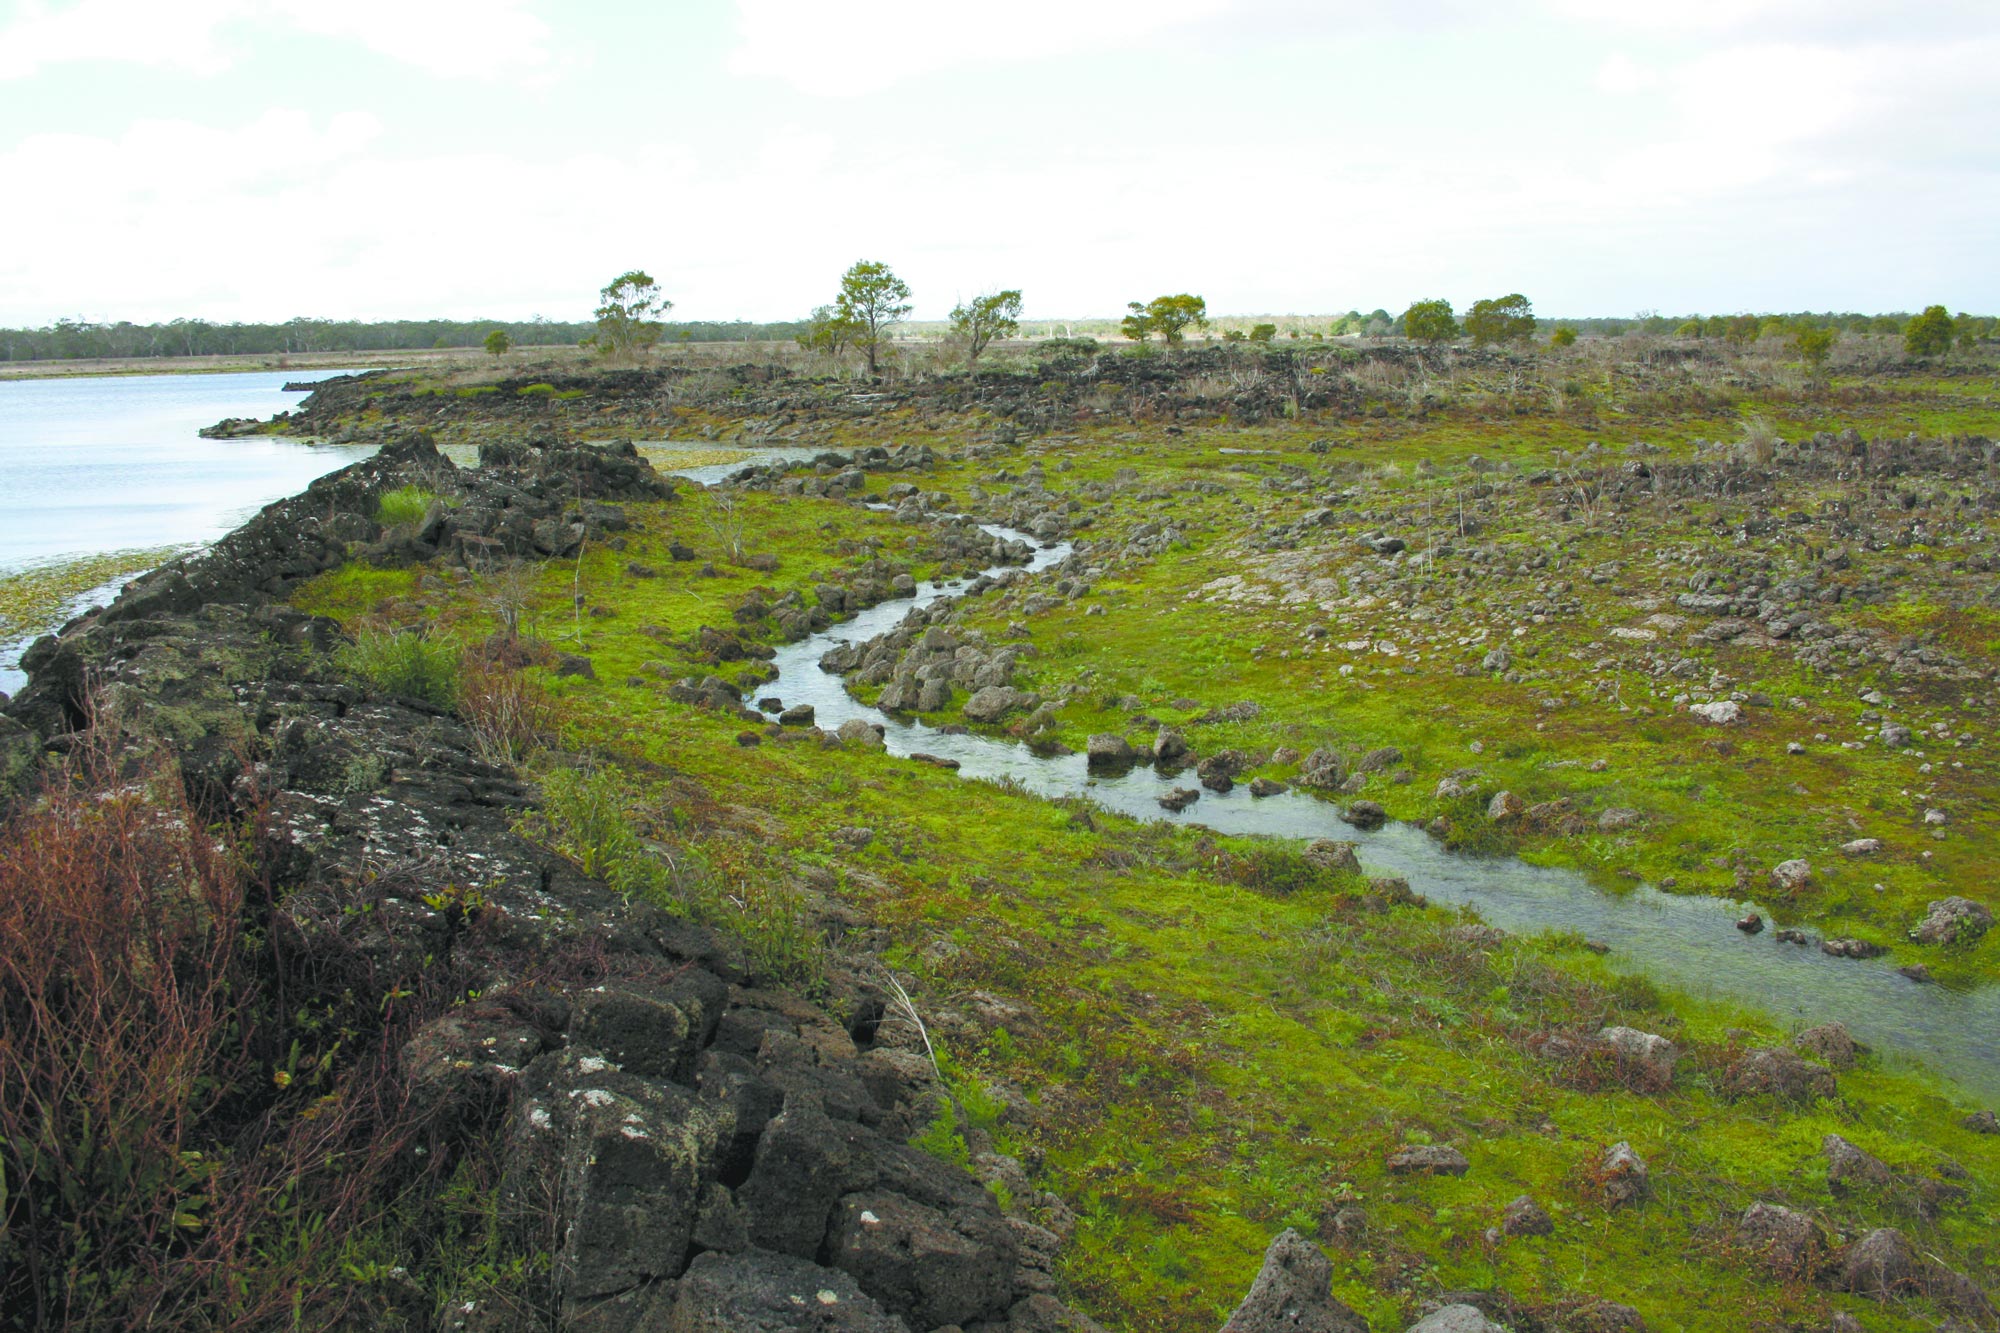 D: Volcanic rocks and a stream at Budj Bim